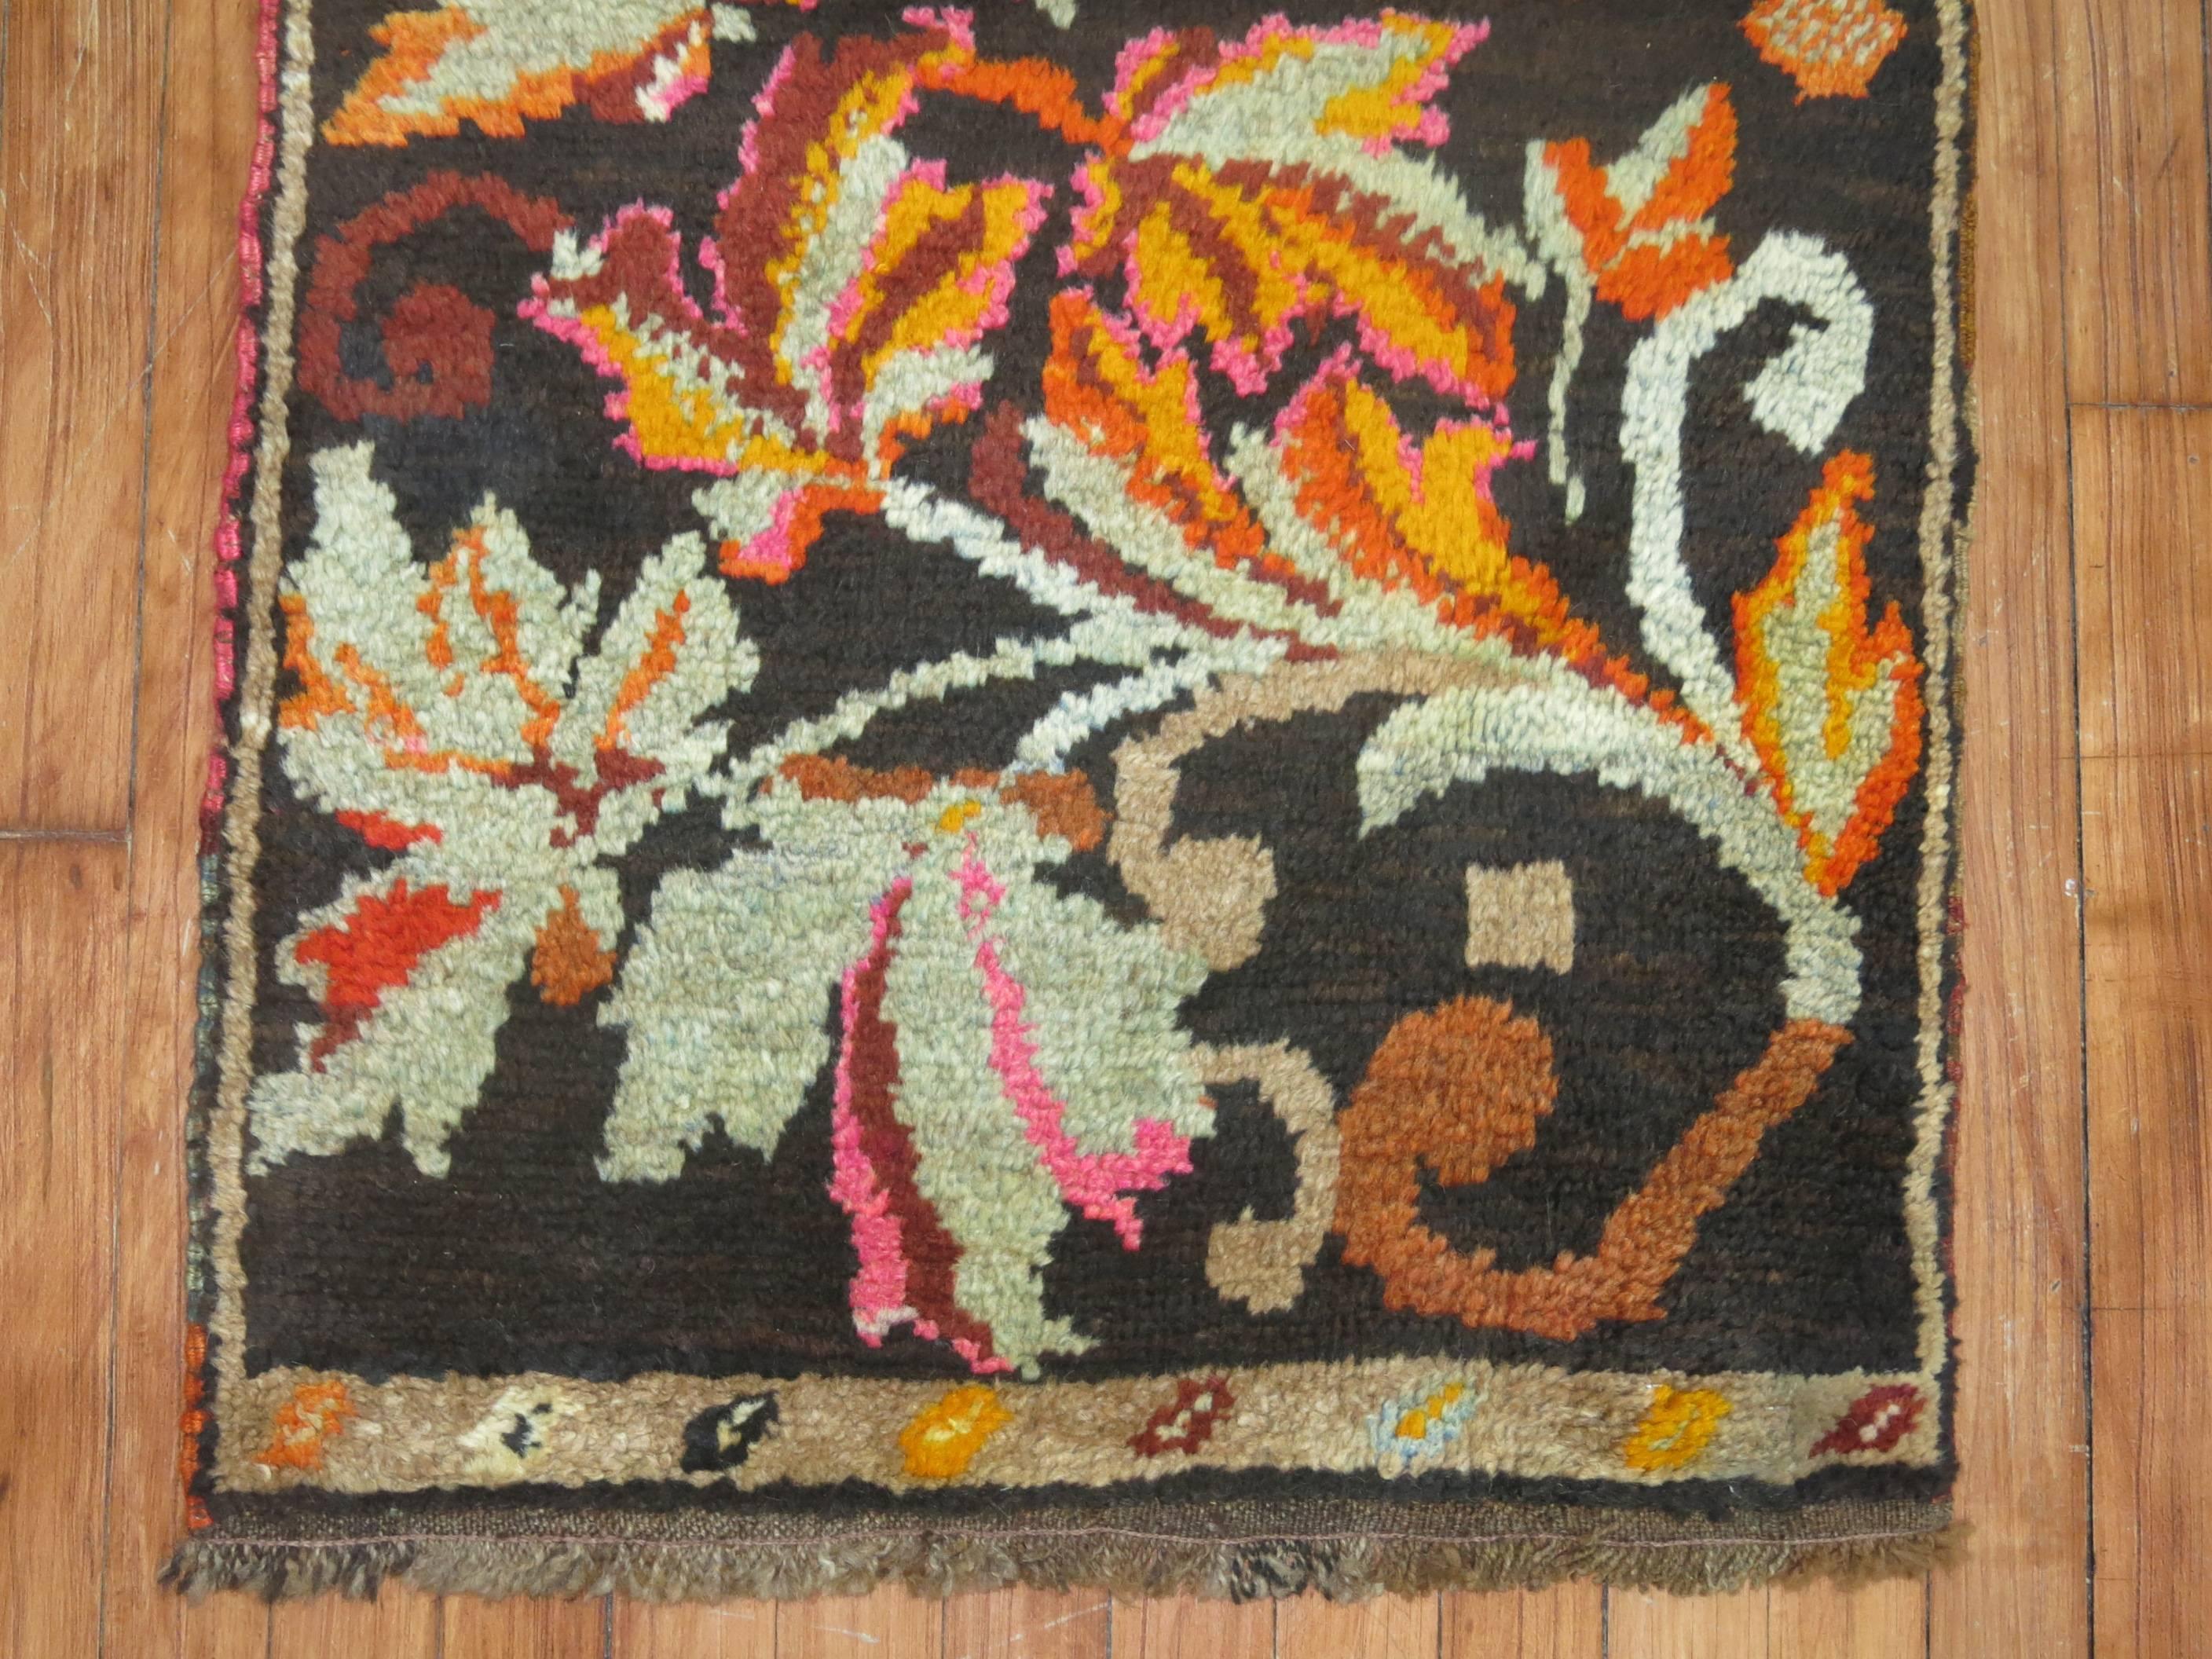 Gorgeous vintage Turkish rug with a floral design.